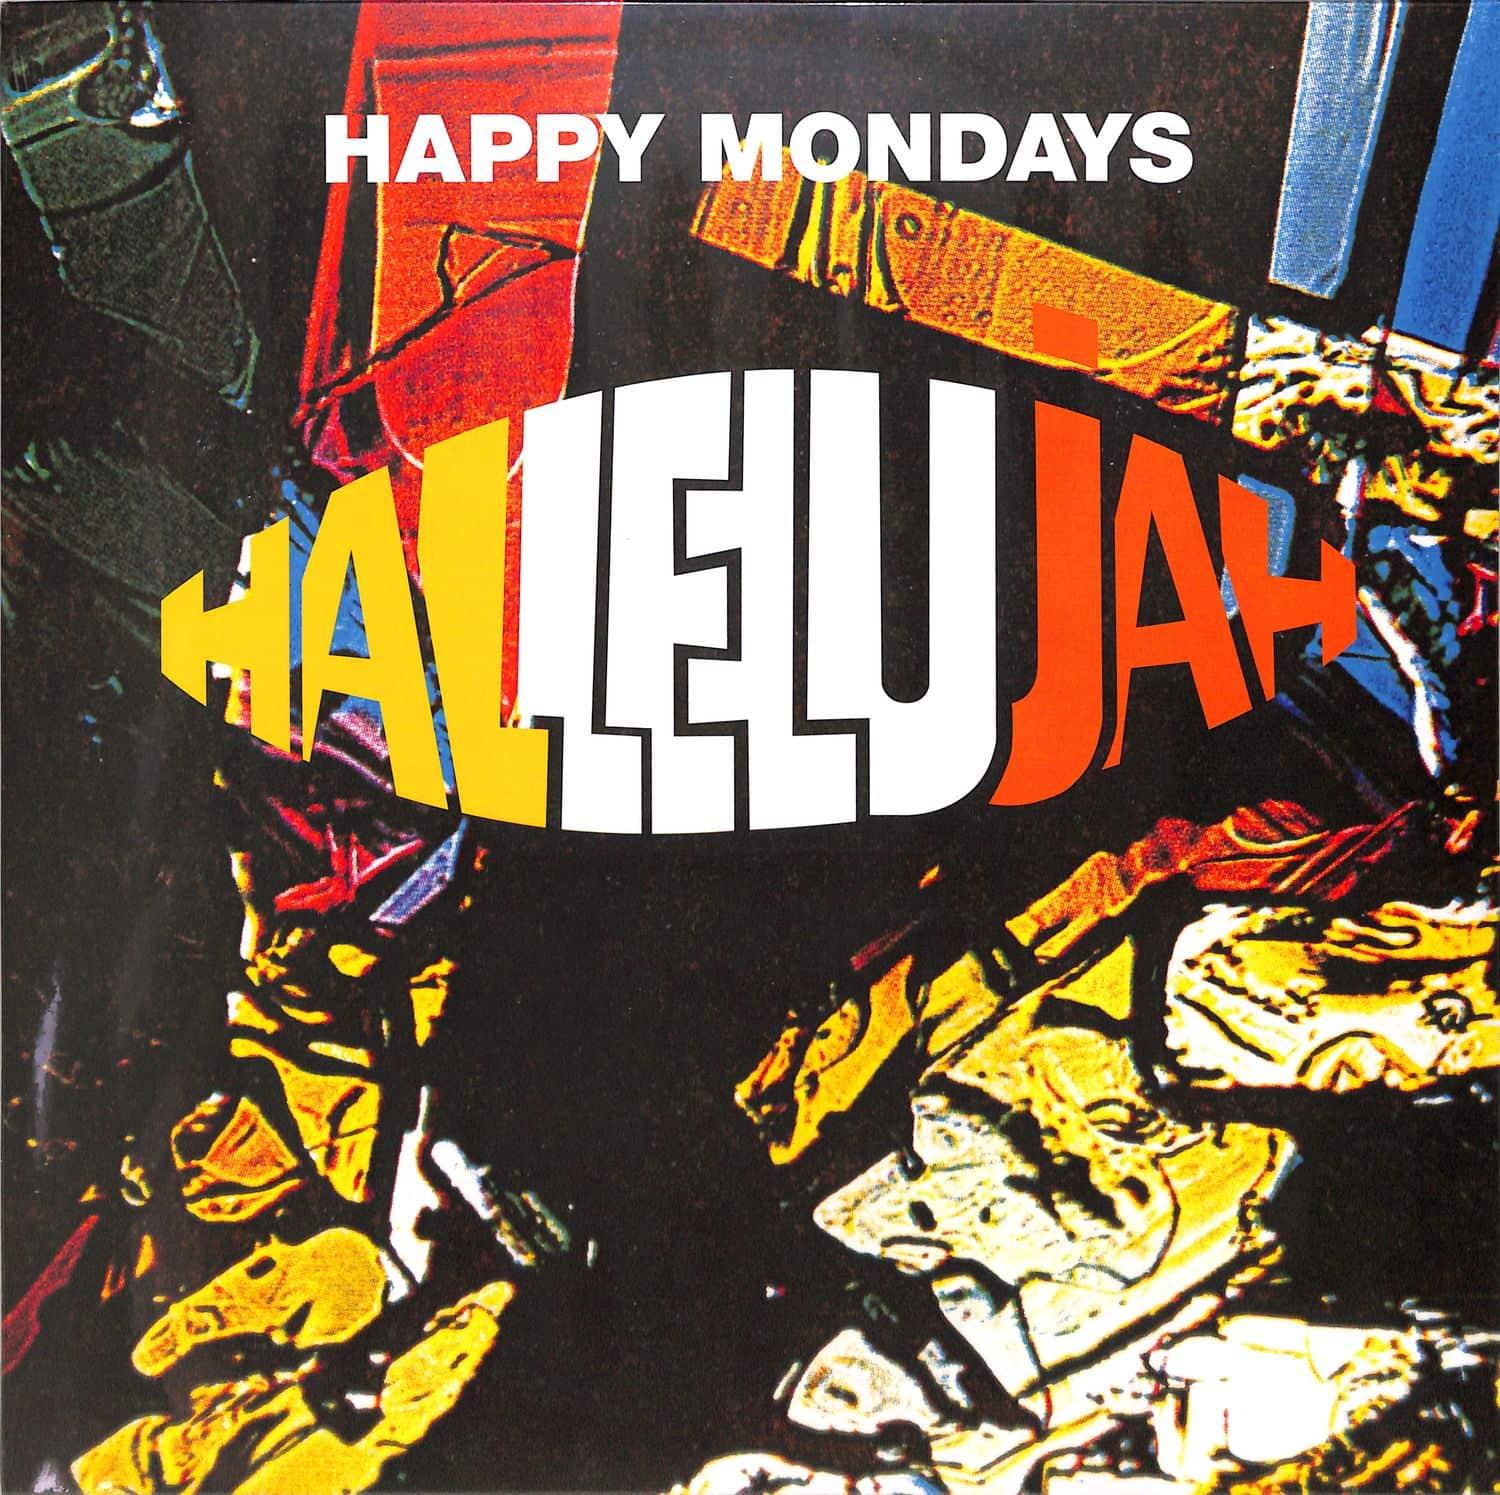 Happy Mondays - HALLELUJAH 